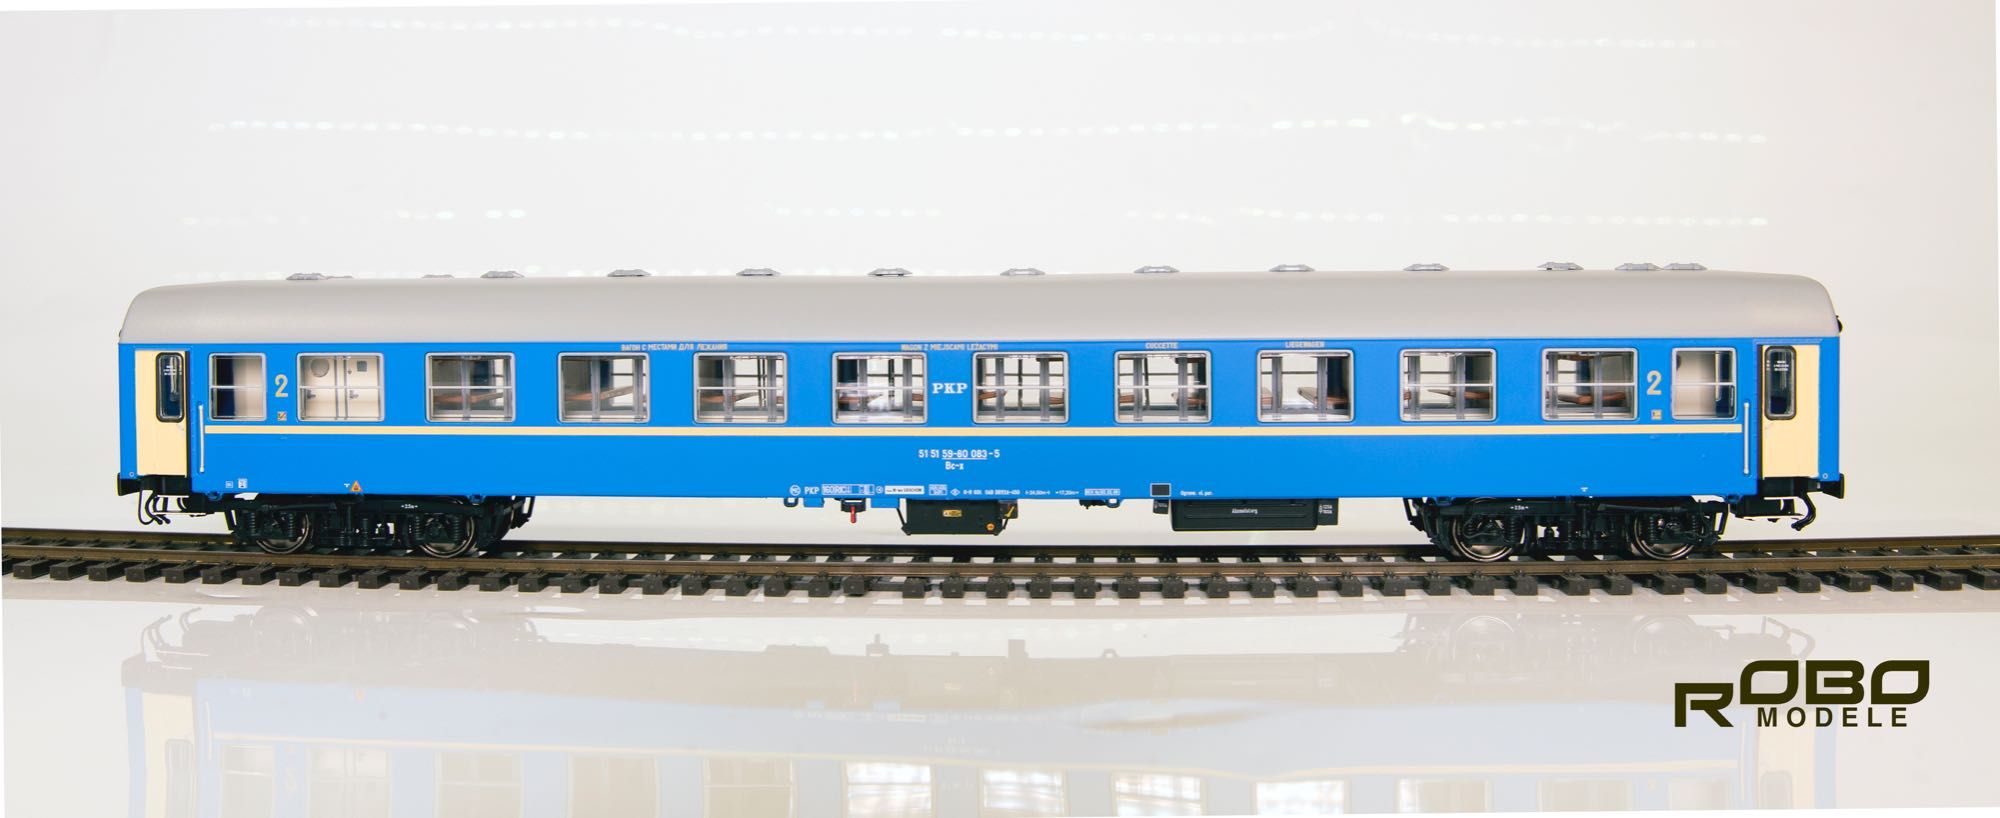 ROBO Modele Nr. 244310 wagon osobowy